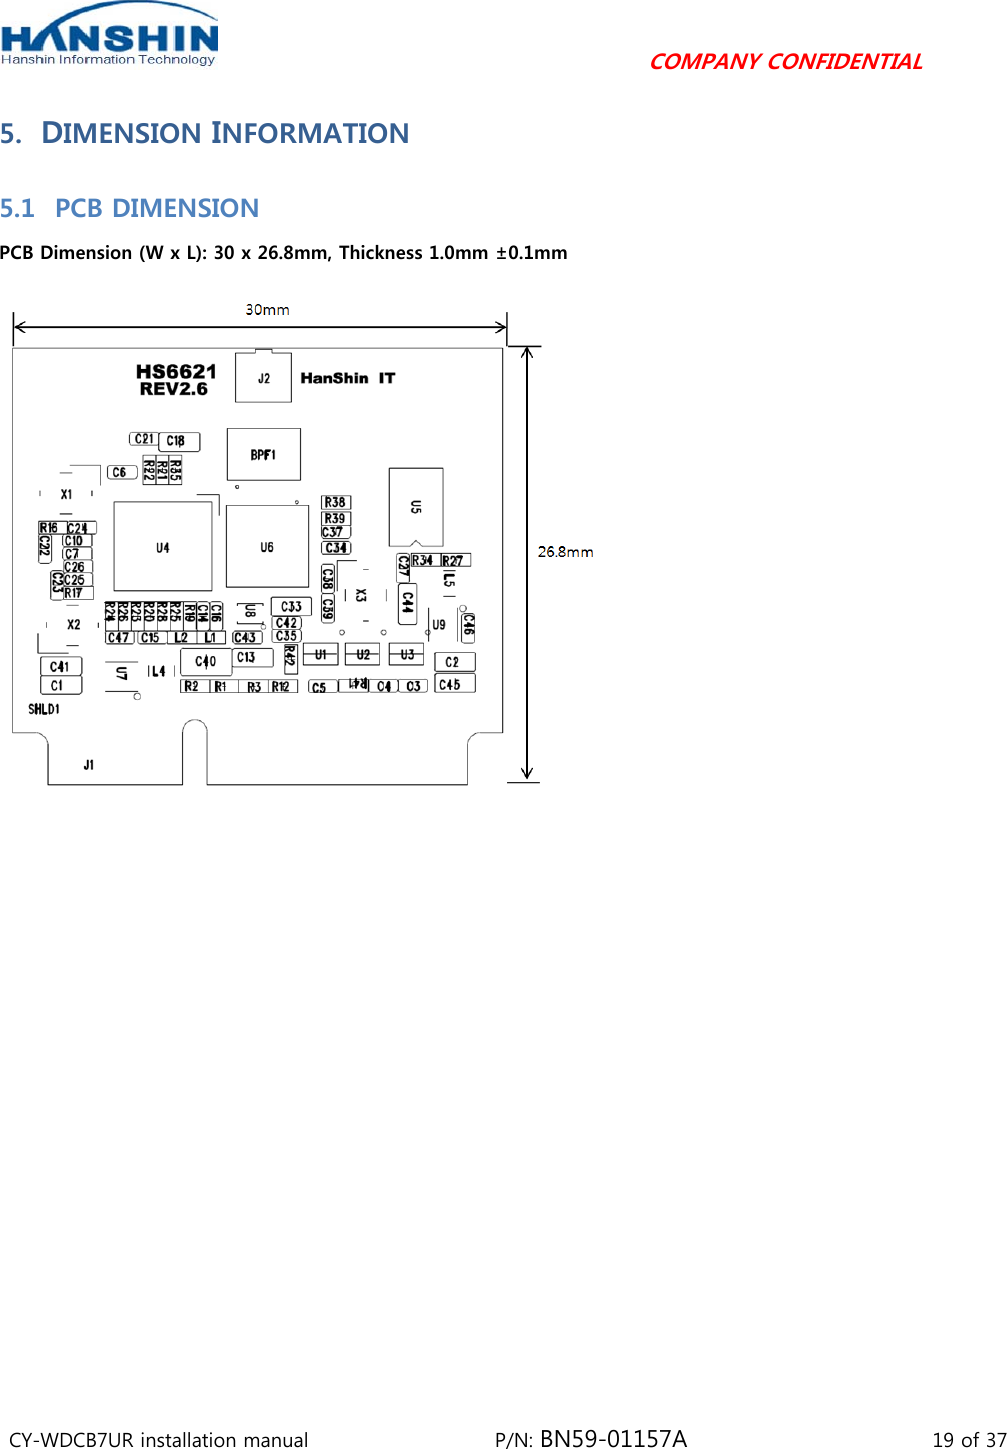                                         COMPANY CONFIDENTIAL CY-WDCB7UR installation manual                   P/N: BN59-01157A                         19 of 37 5. DIMENSION INFORMATION 5.1 PCB DIMENSION PCB Dimension (W x L): 30 x 26.8mm, Thickness 1.0mm ±0.1mm   